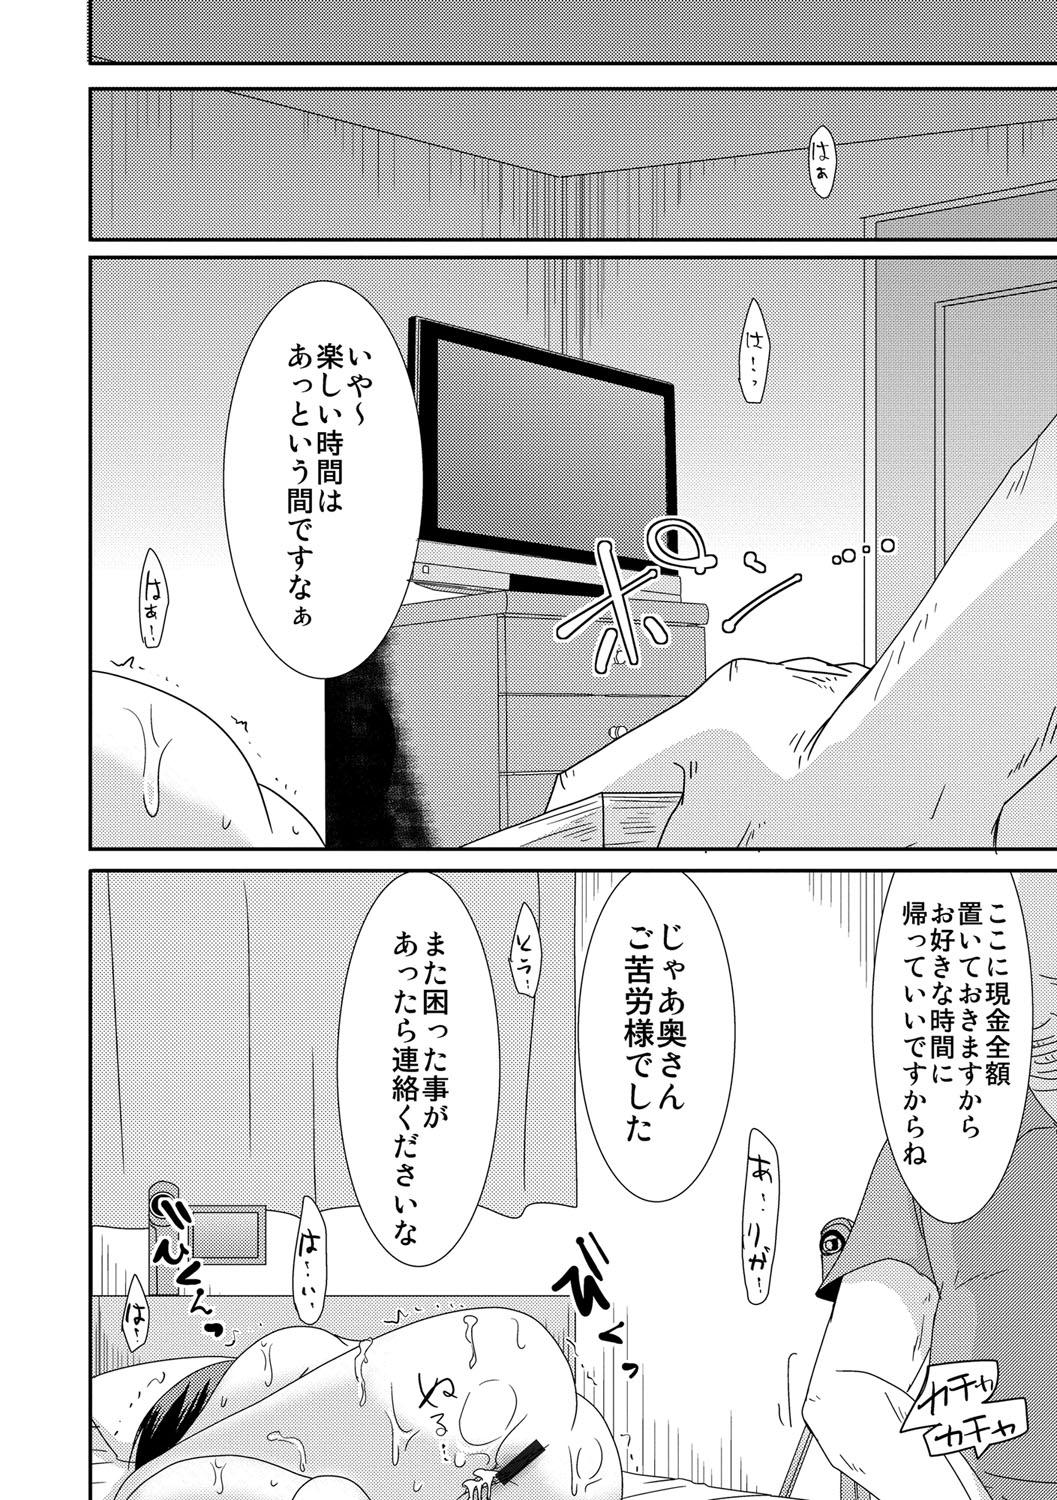 [Kurogane] Komochi x 1-san to Koe Dashi Genkin SEX - Voiceless SEX With the one-time divorcee has Children [Digital] 102